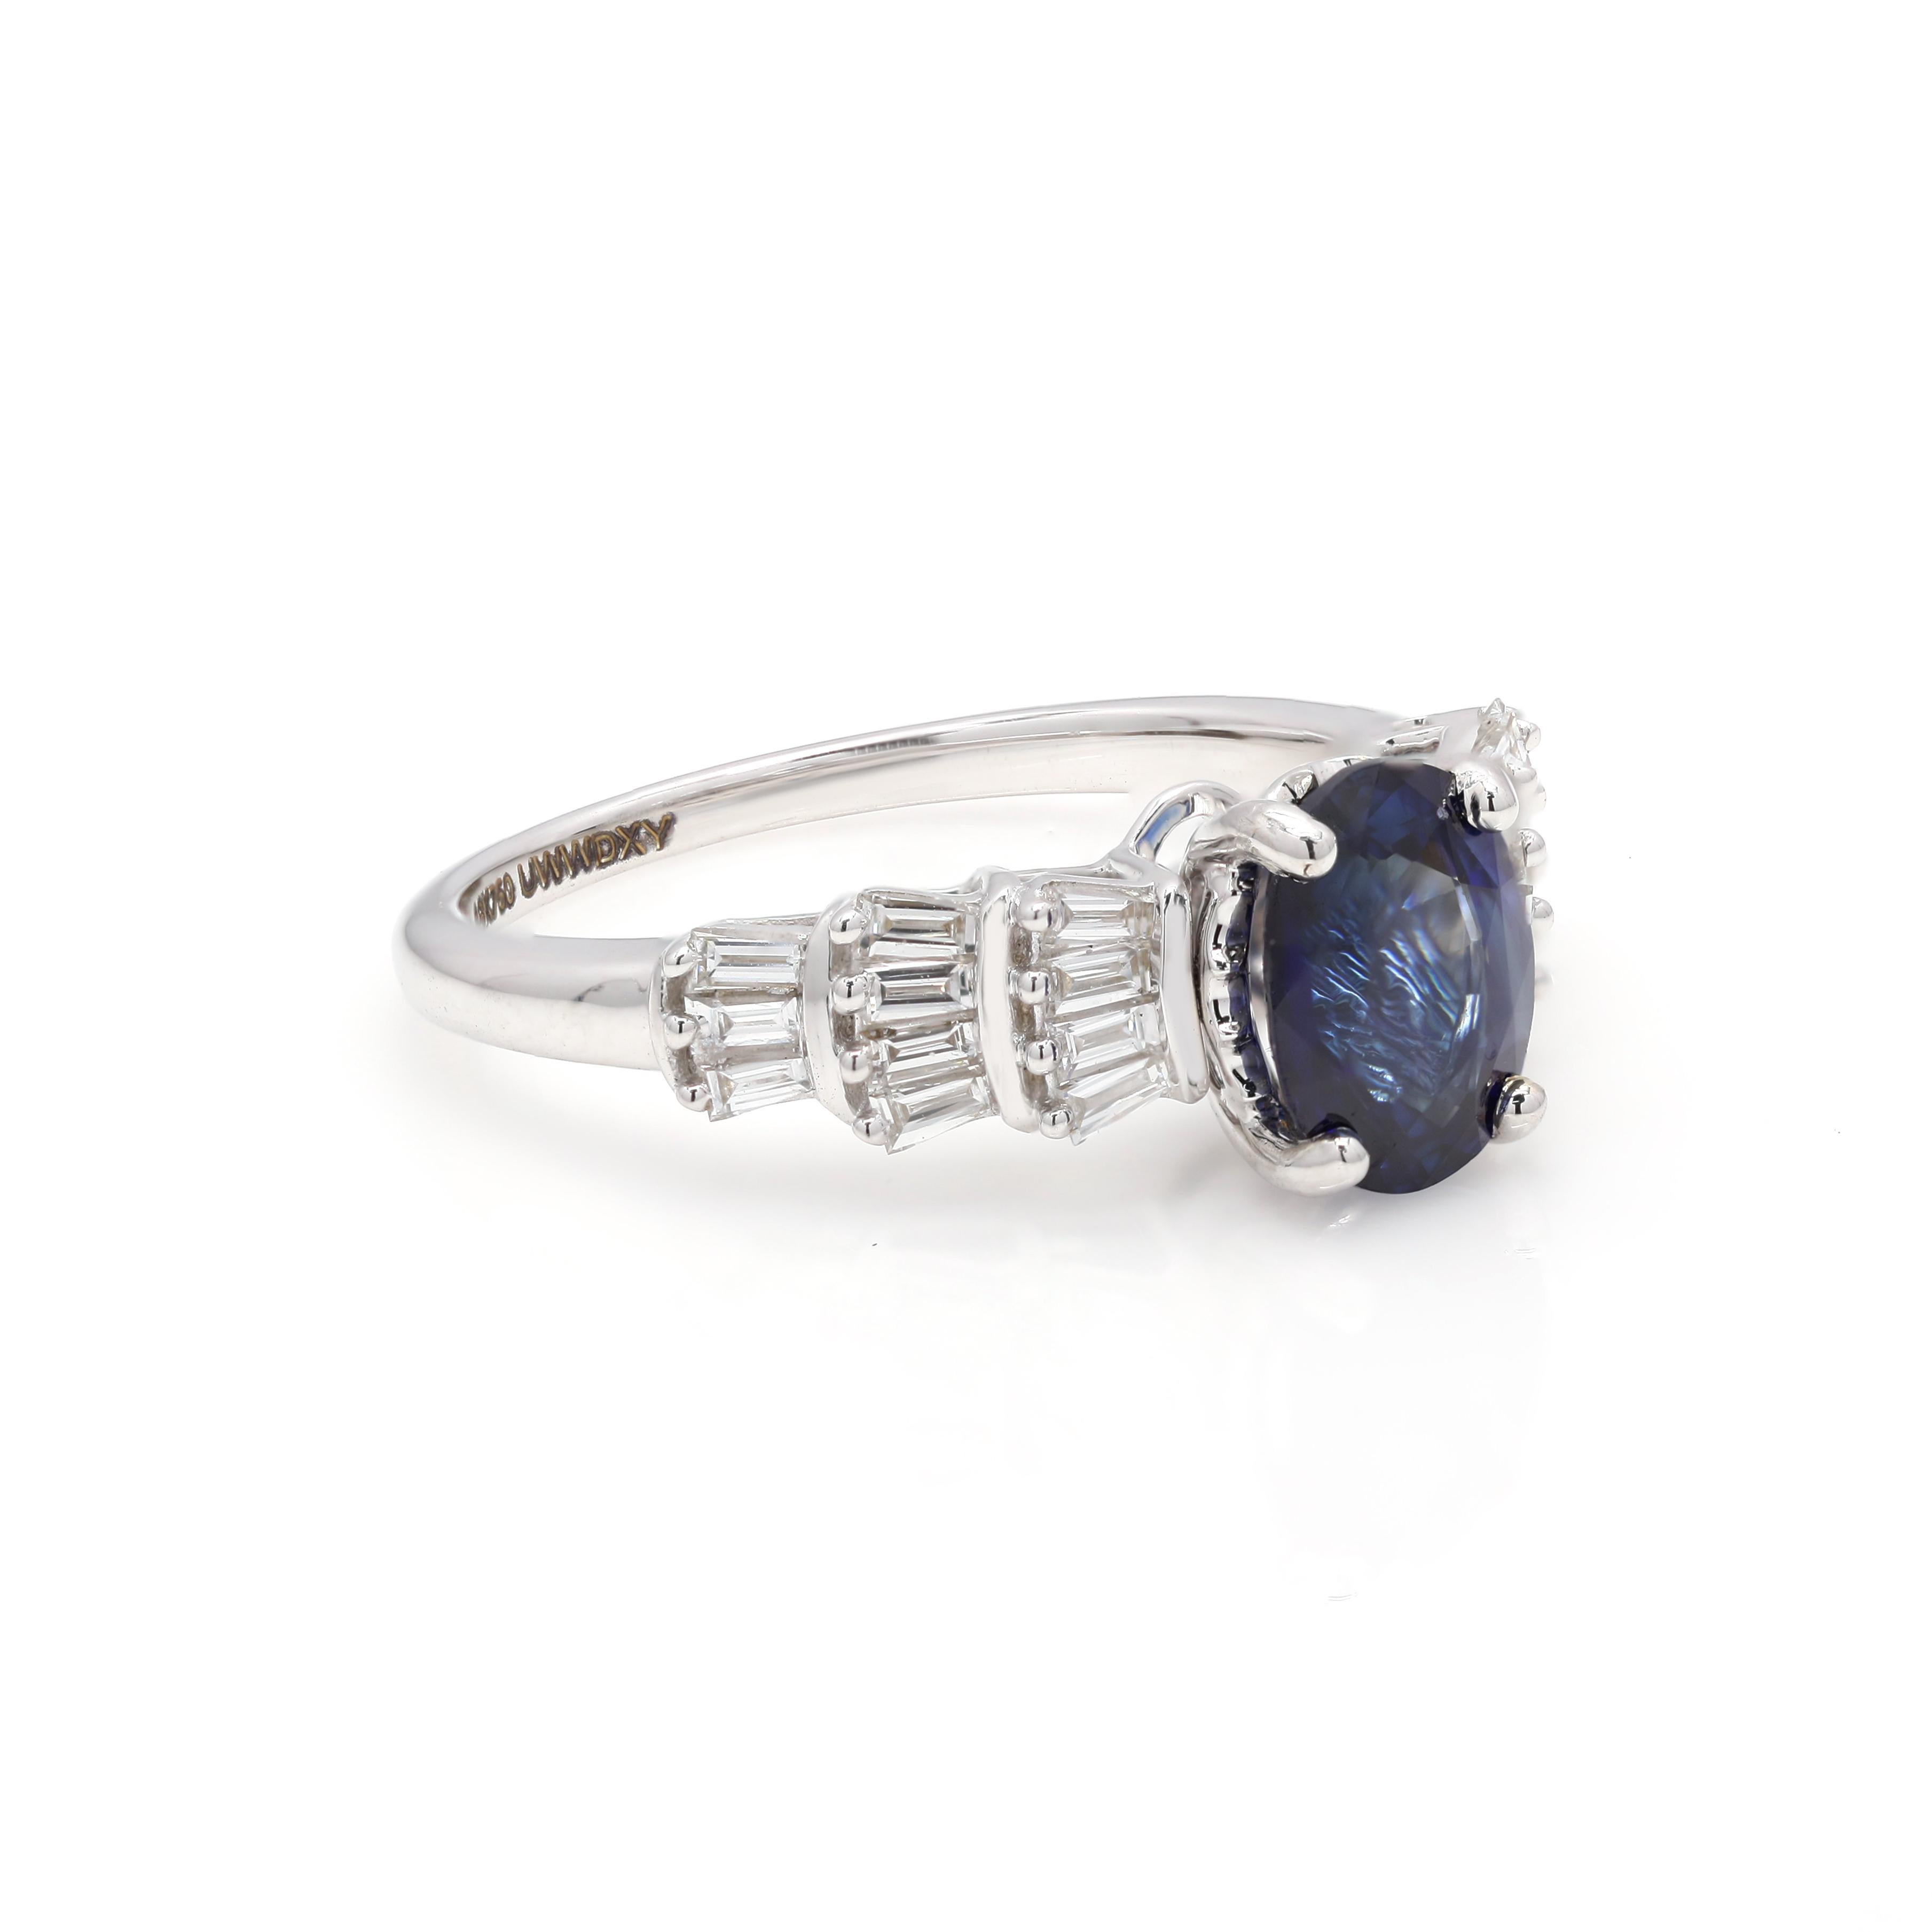 For Sale:  Elegant Blue Sapphire and Diamond Baguette Wedding Ring in 18k White Gold 2